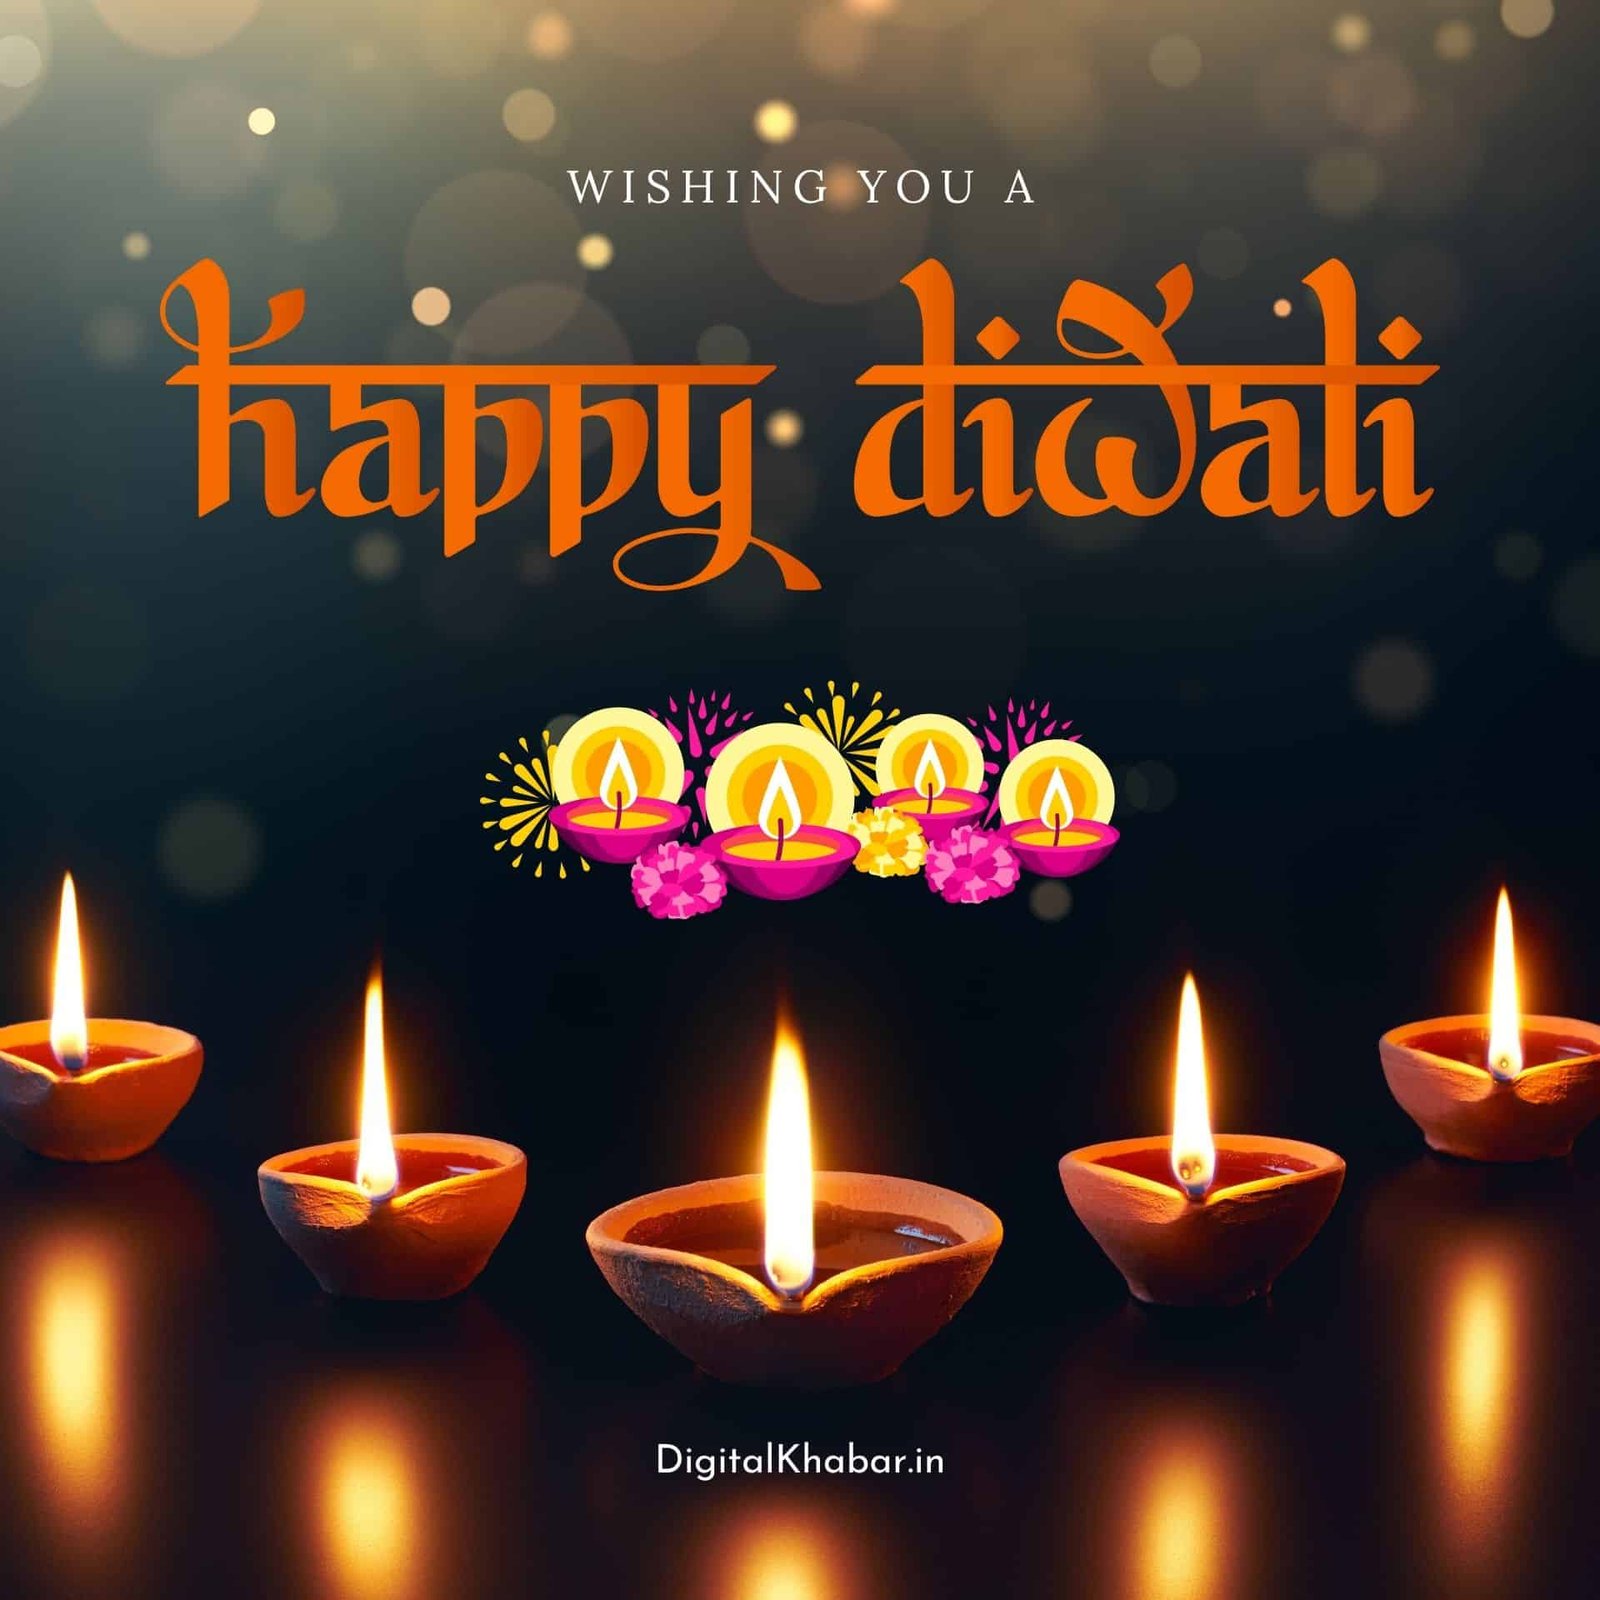 Happy diwali image for whatsapp